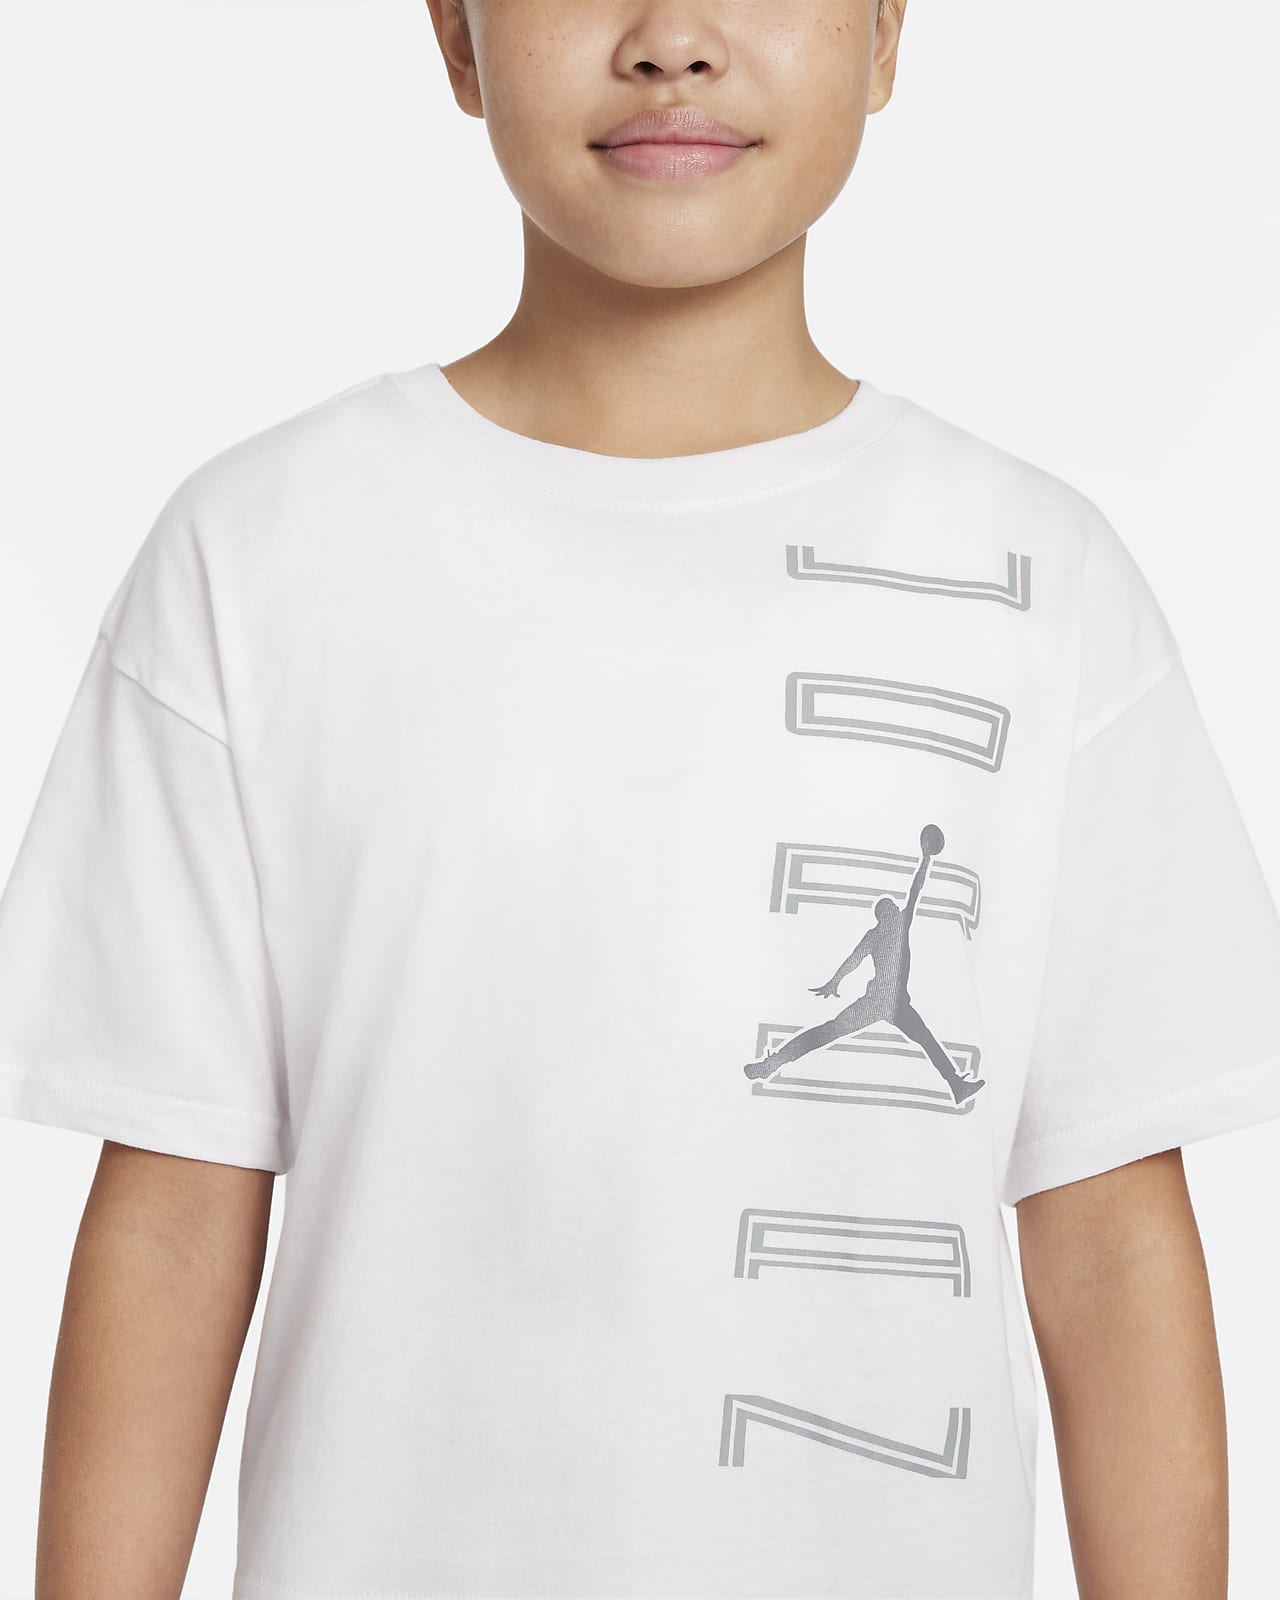 kids jordan shirts